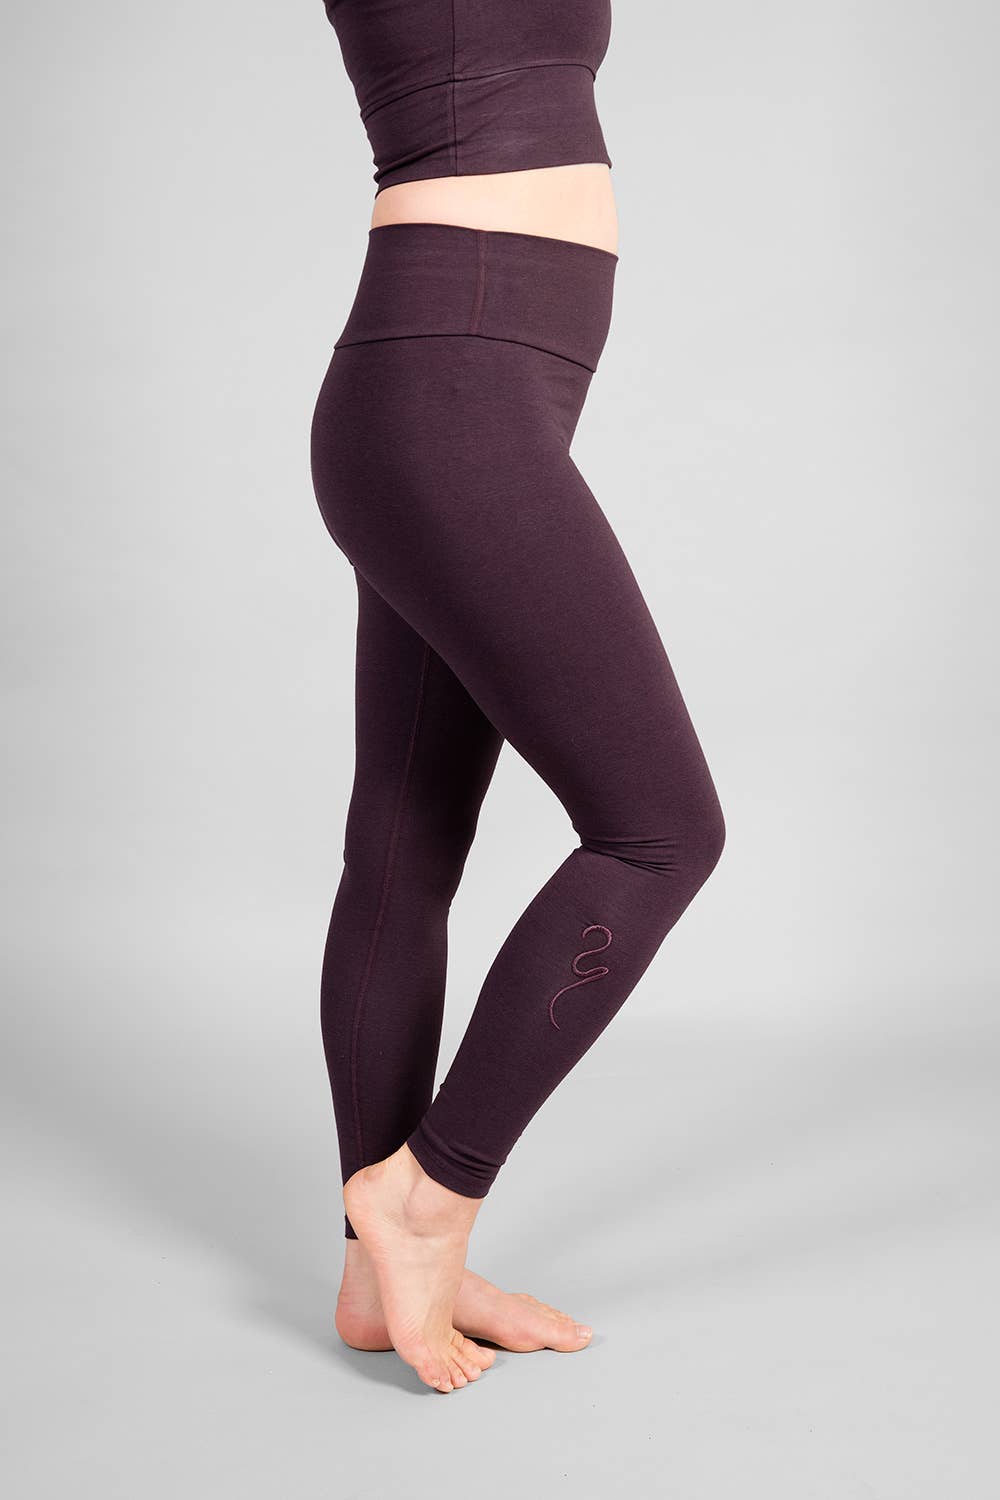 Vega Women's Yoga Leggings, Dark purple